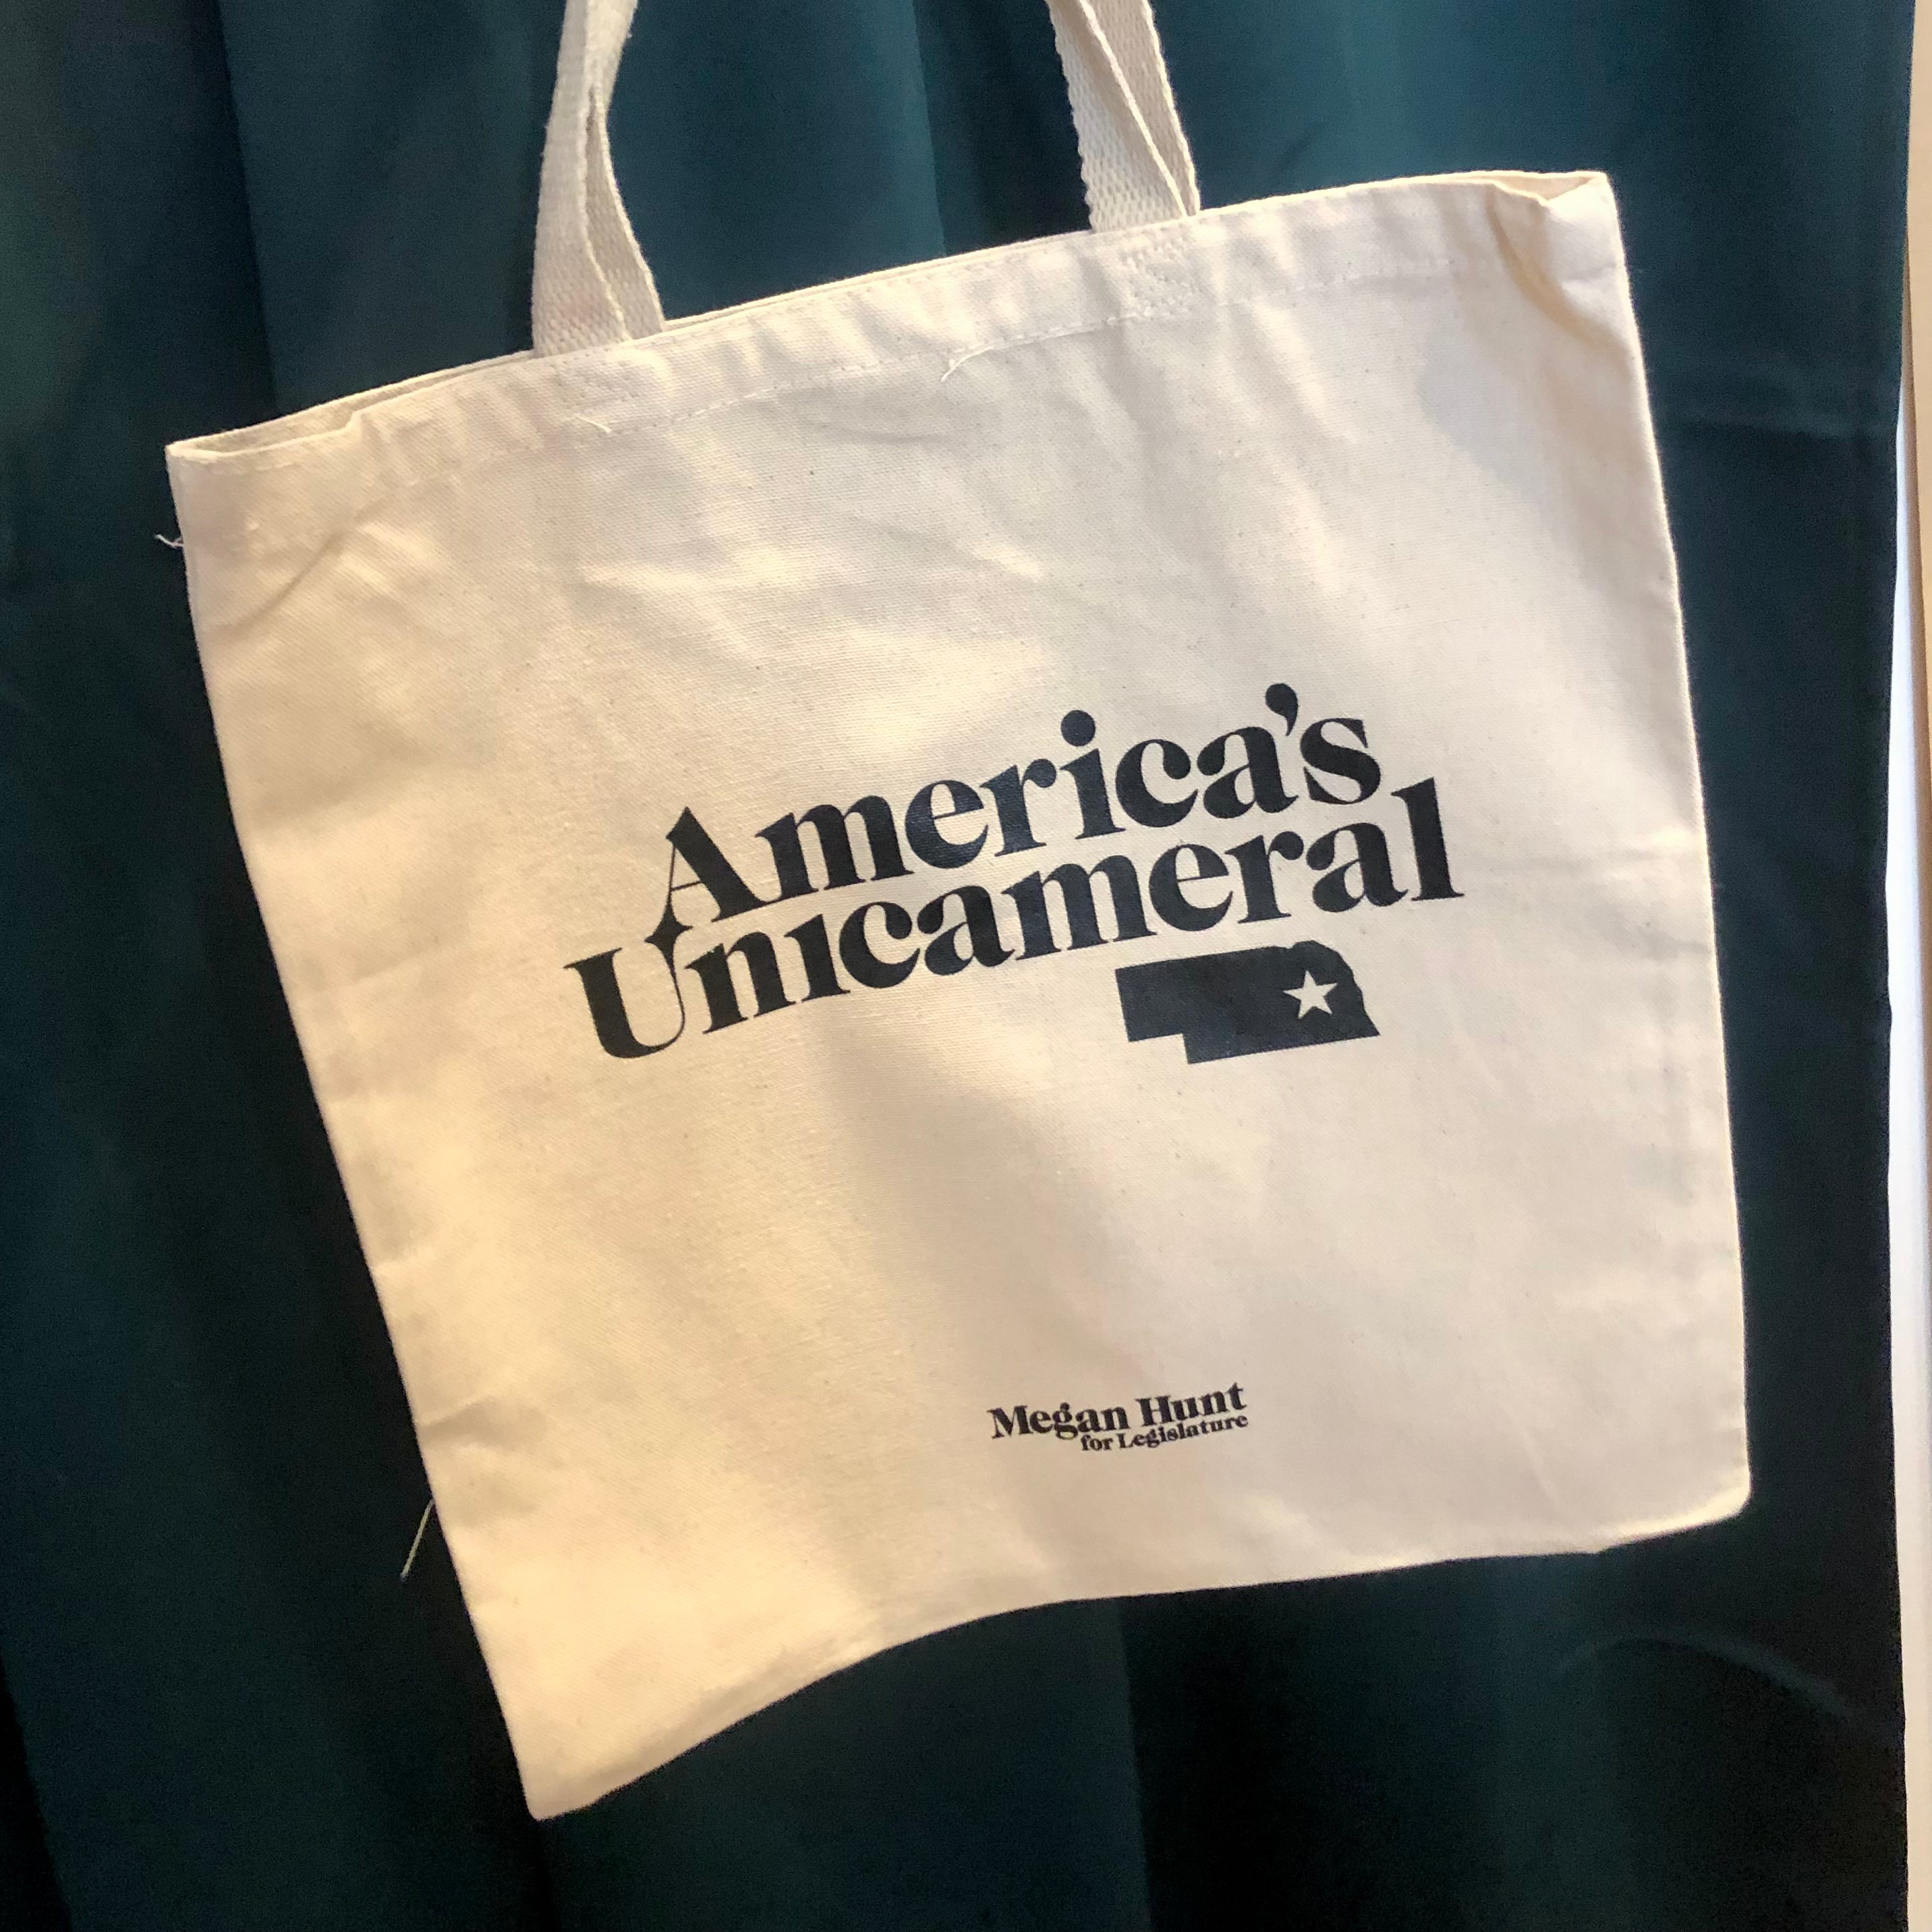 America’s Unicameral Tote Bag